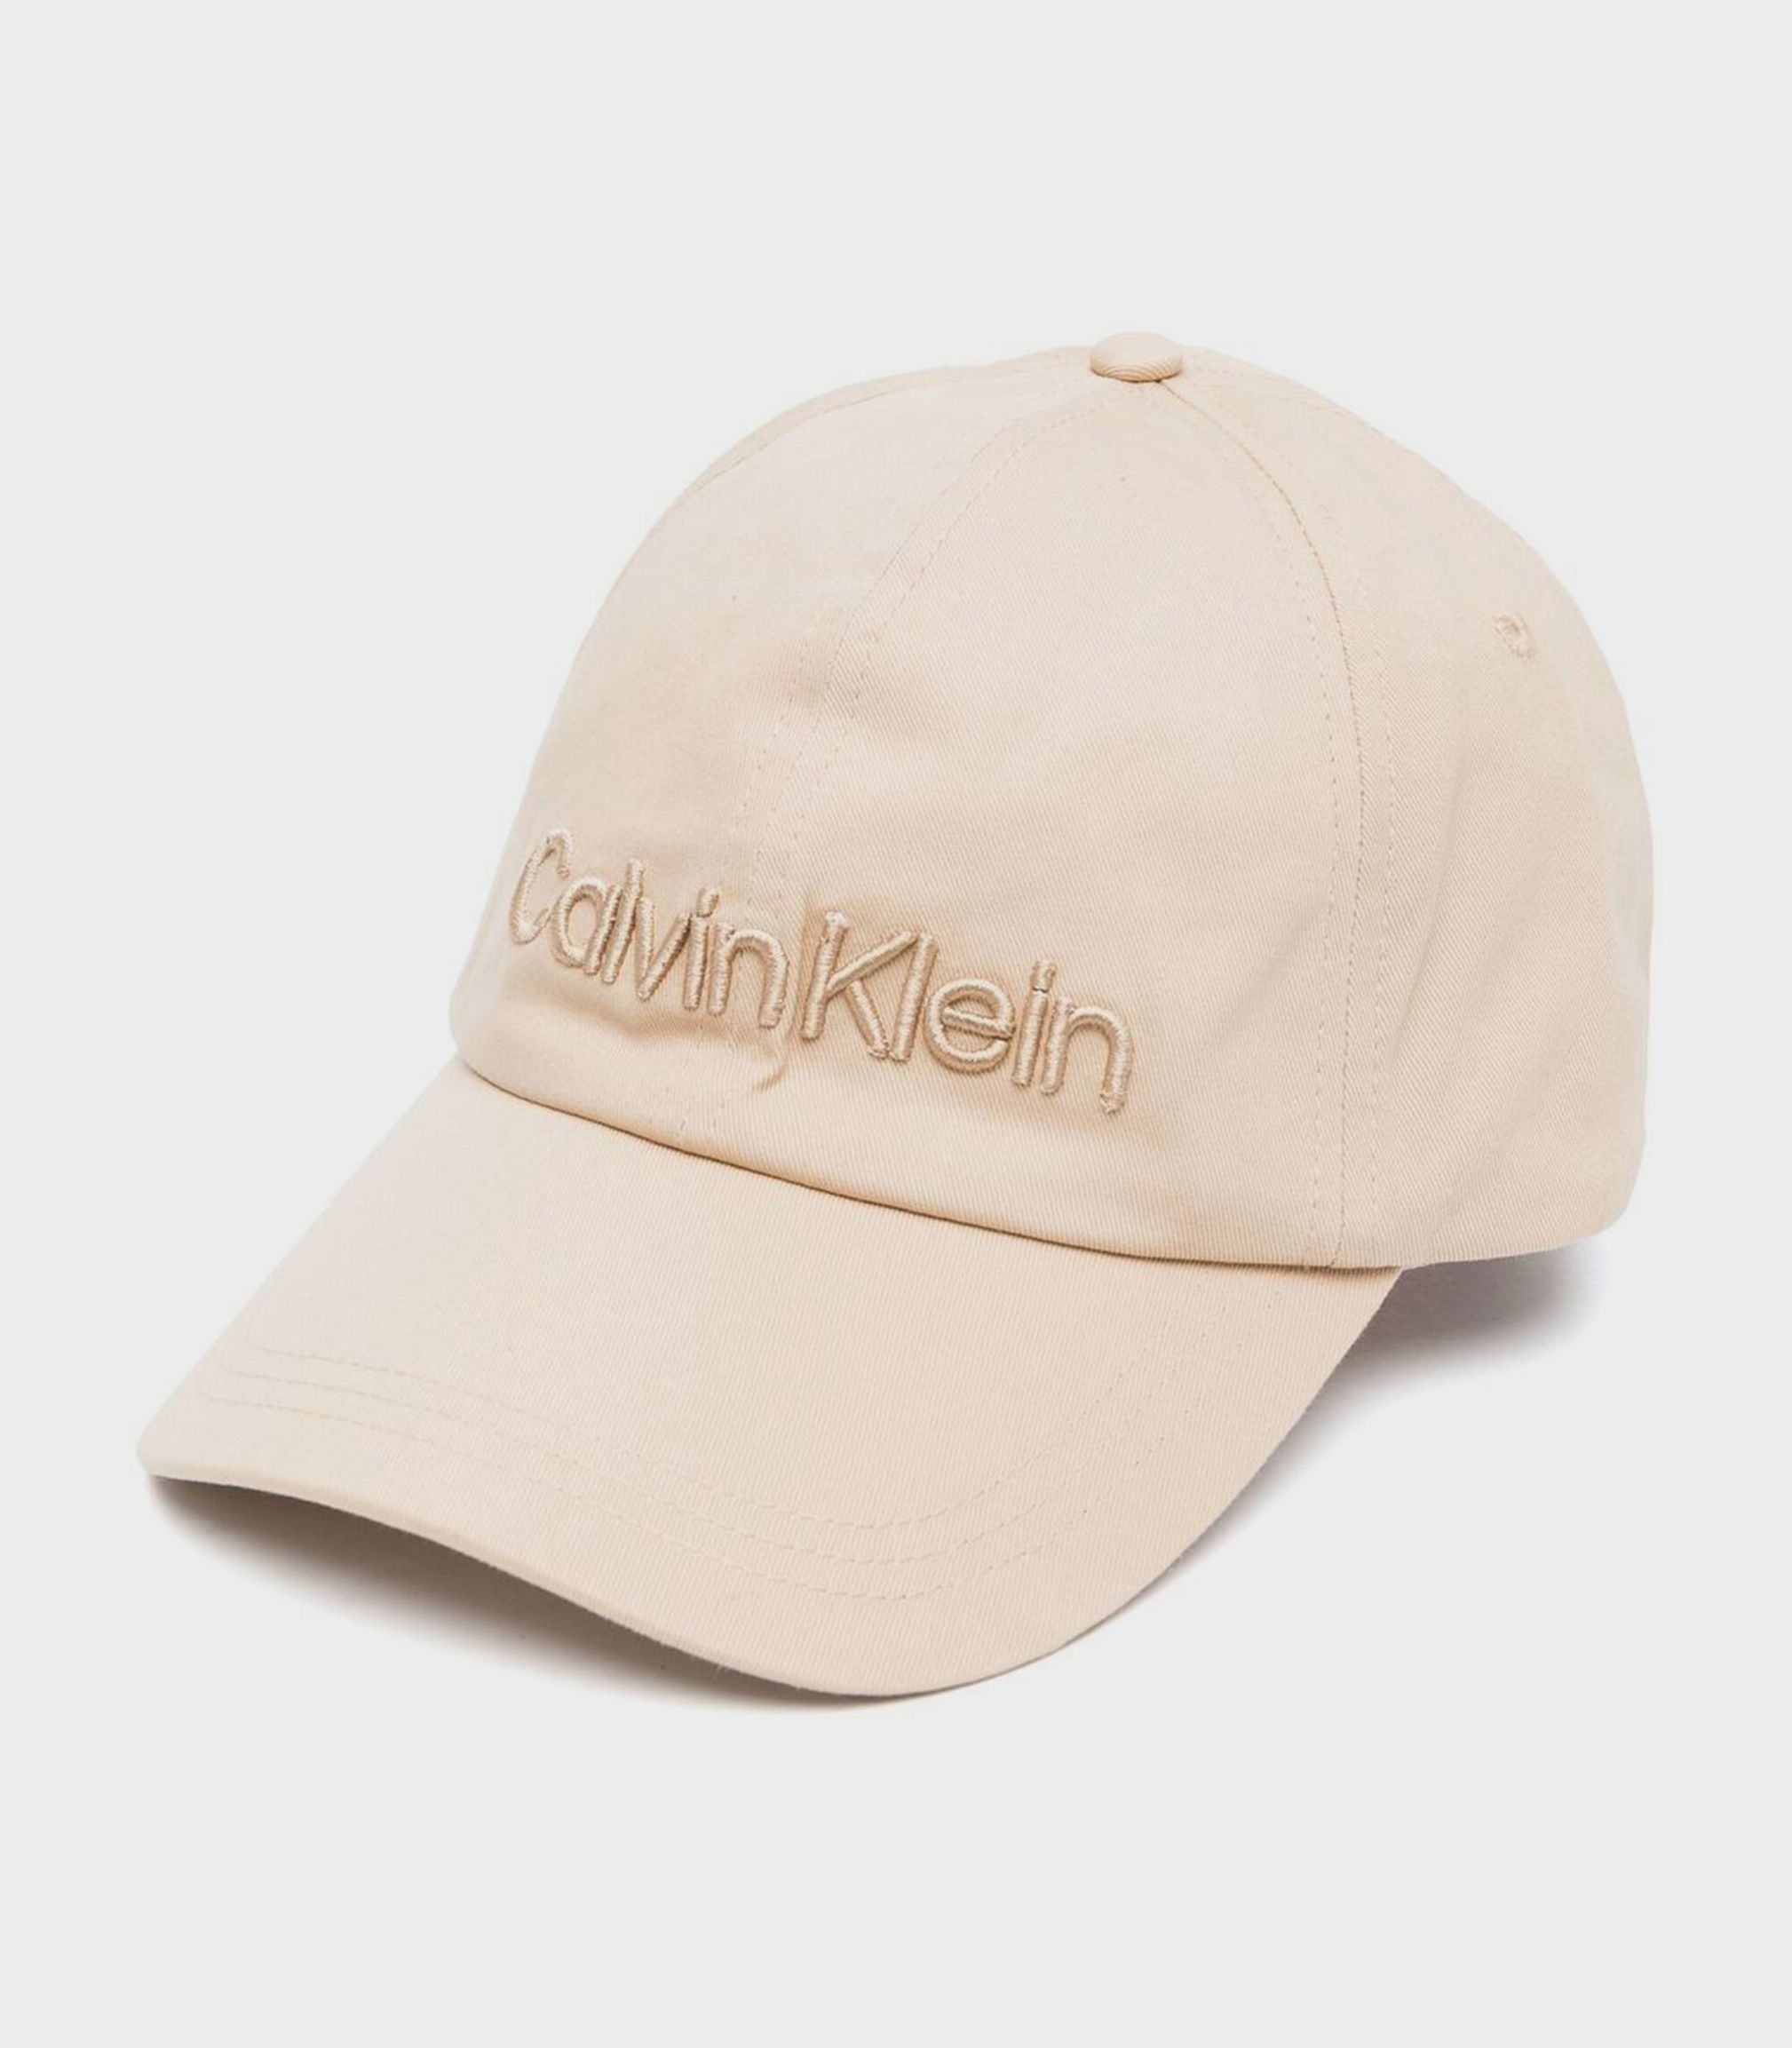 Calvin Klein - calvin embroidery bb cap - men - dstore online